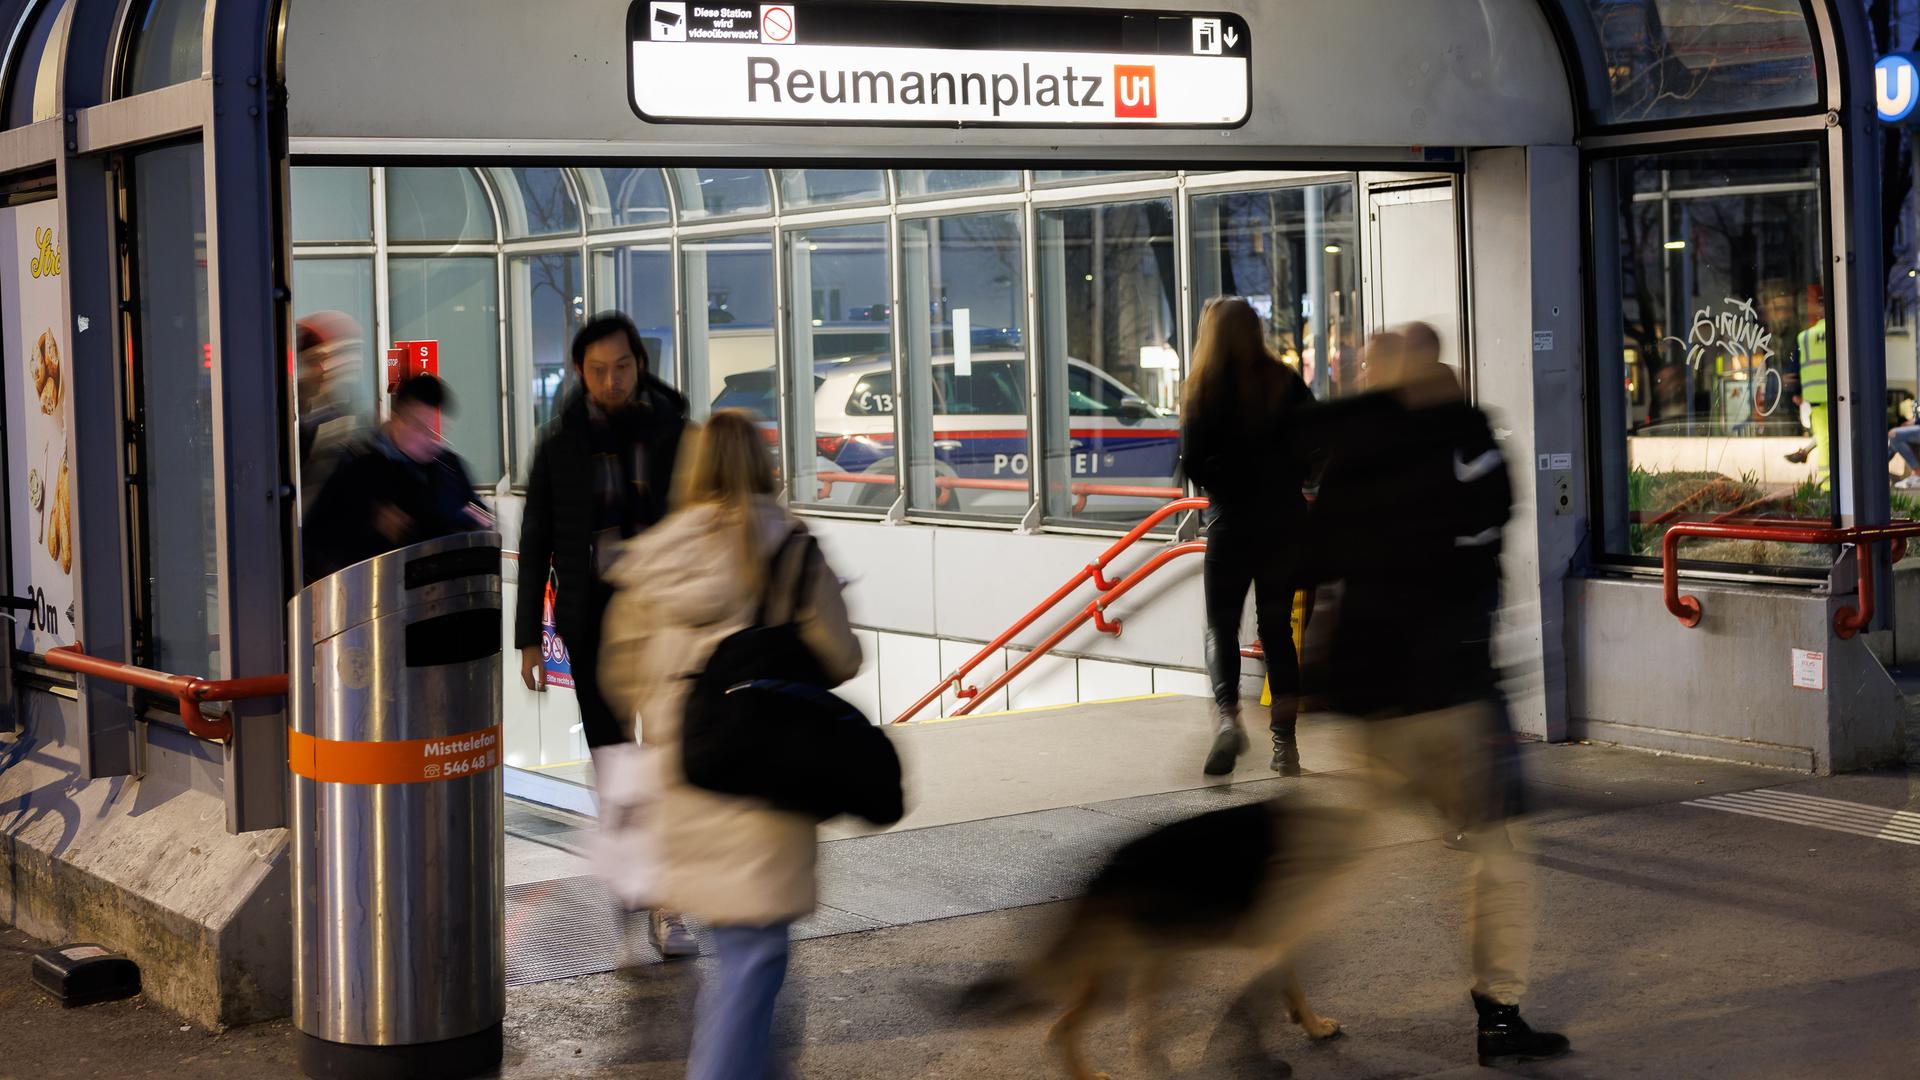 Passanten abends unterwegs am U-Bahnhof Reumannplatz in Wien-Favoriten.